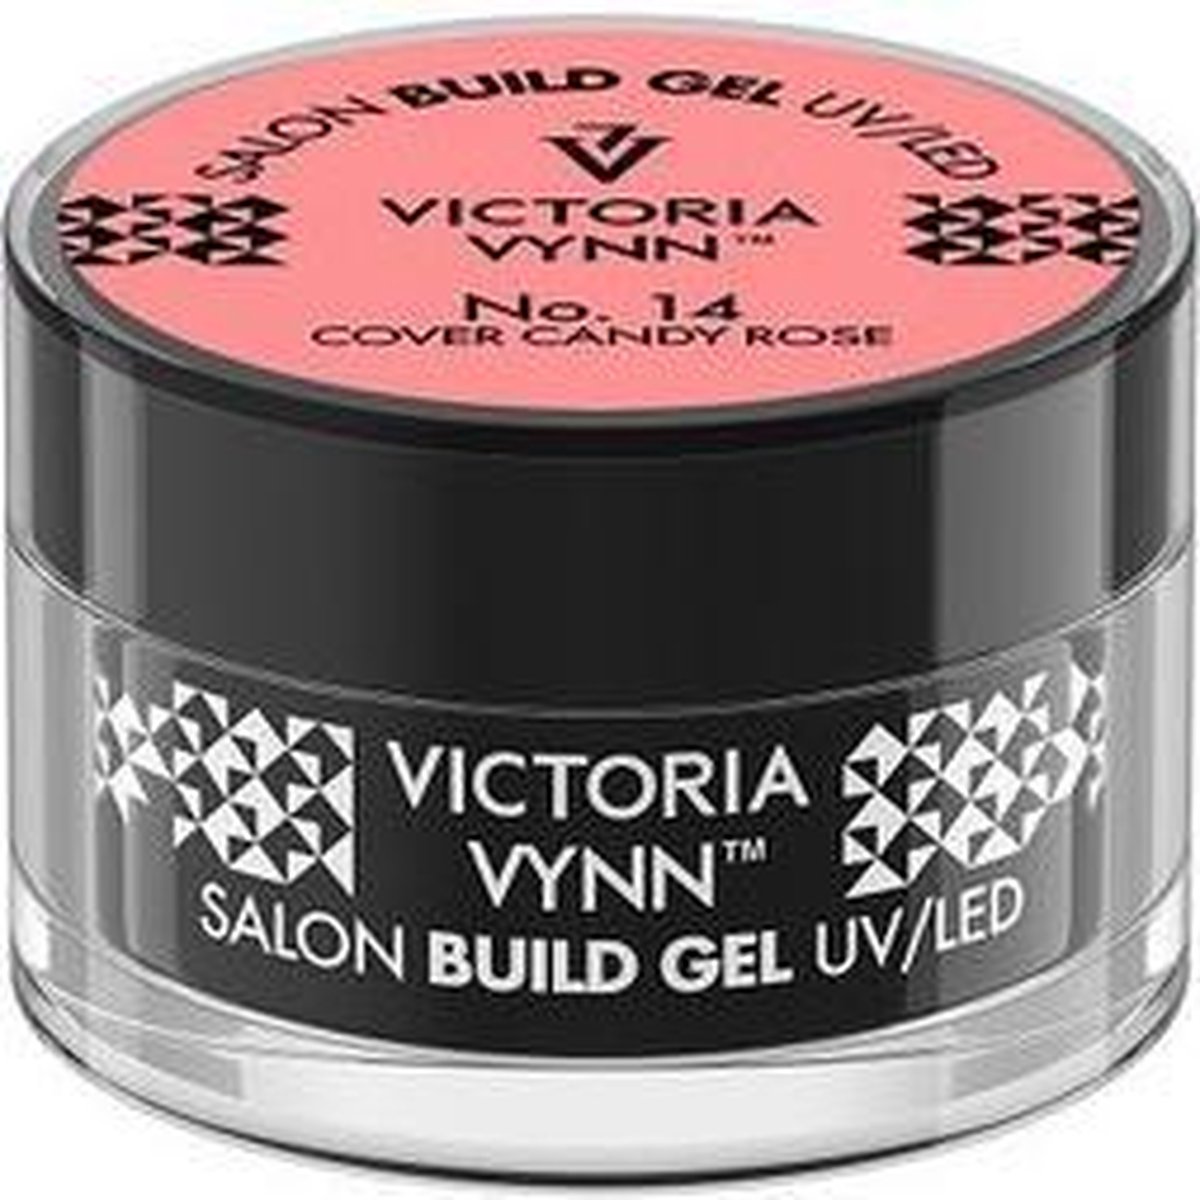 Victoria Vynn Builder Gel - gel om je nagels mee te verlengen of te verstevigen - COVER CANDY ROSE 50ml - Roze cover gel